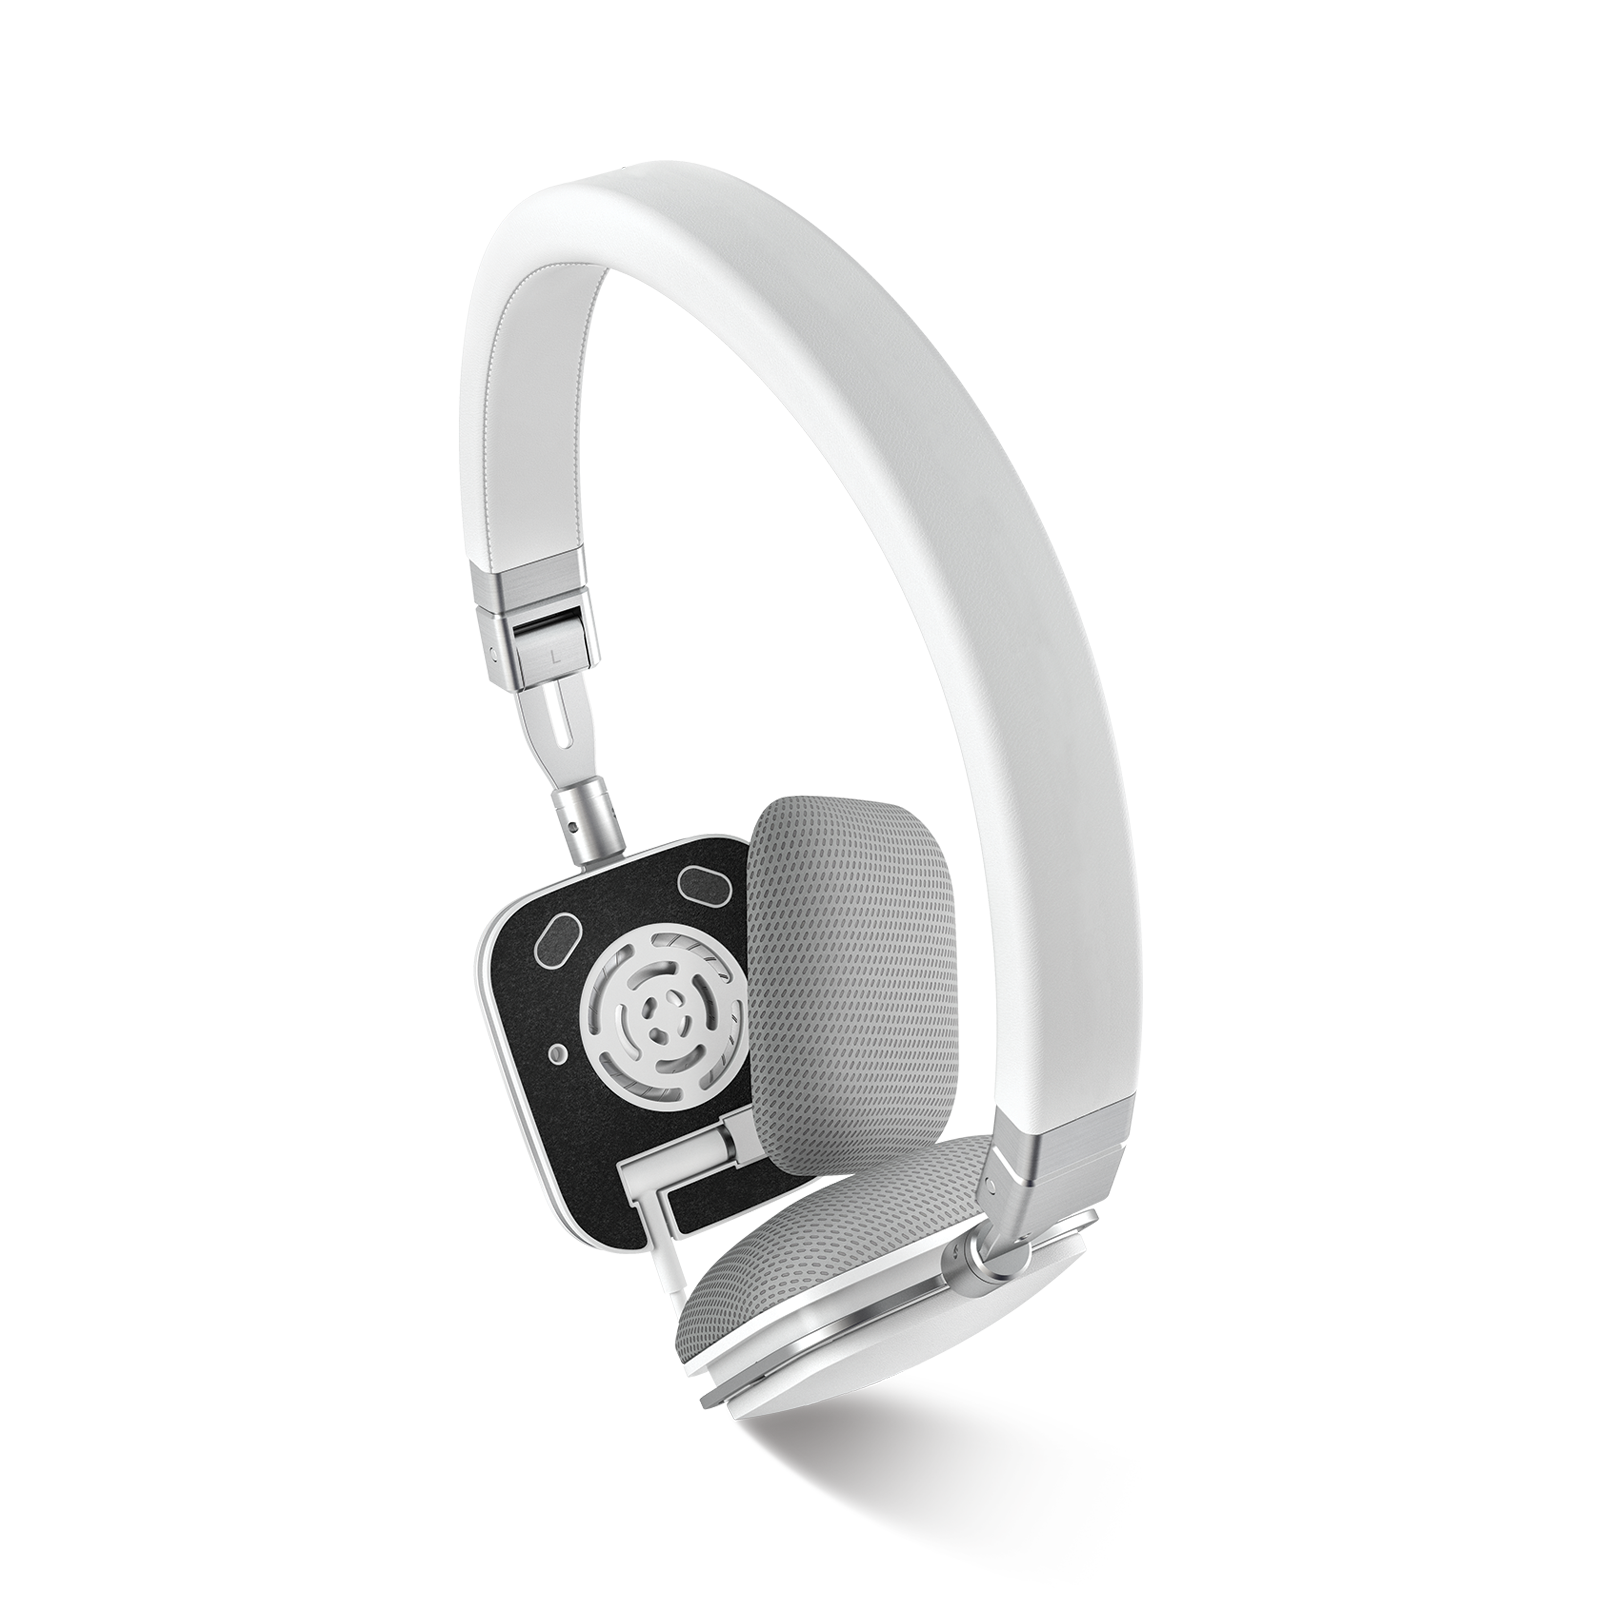 Soho-I - White - Premium, on-ear mini headphones with iOS device compatible remote - Detailshot 2